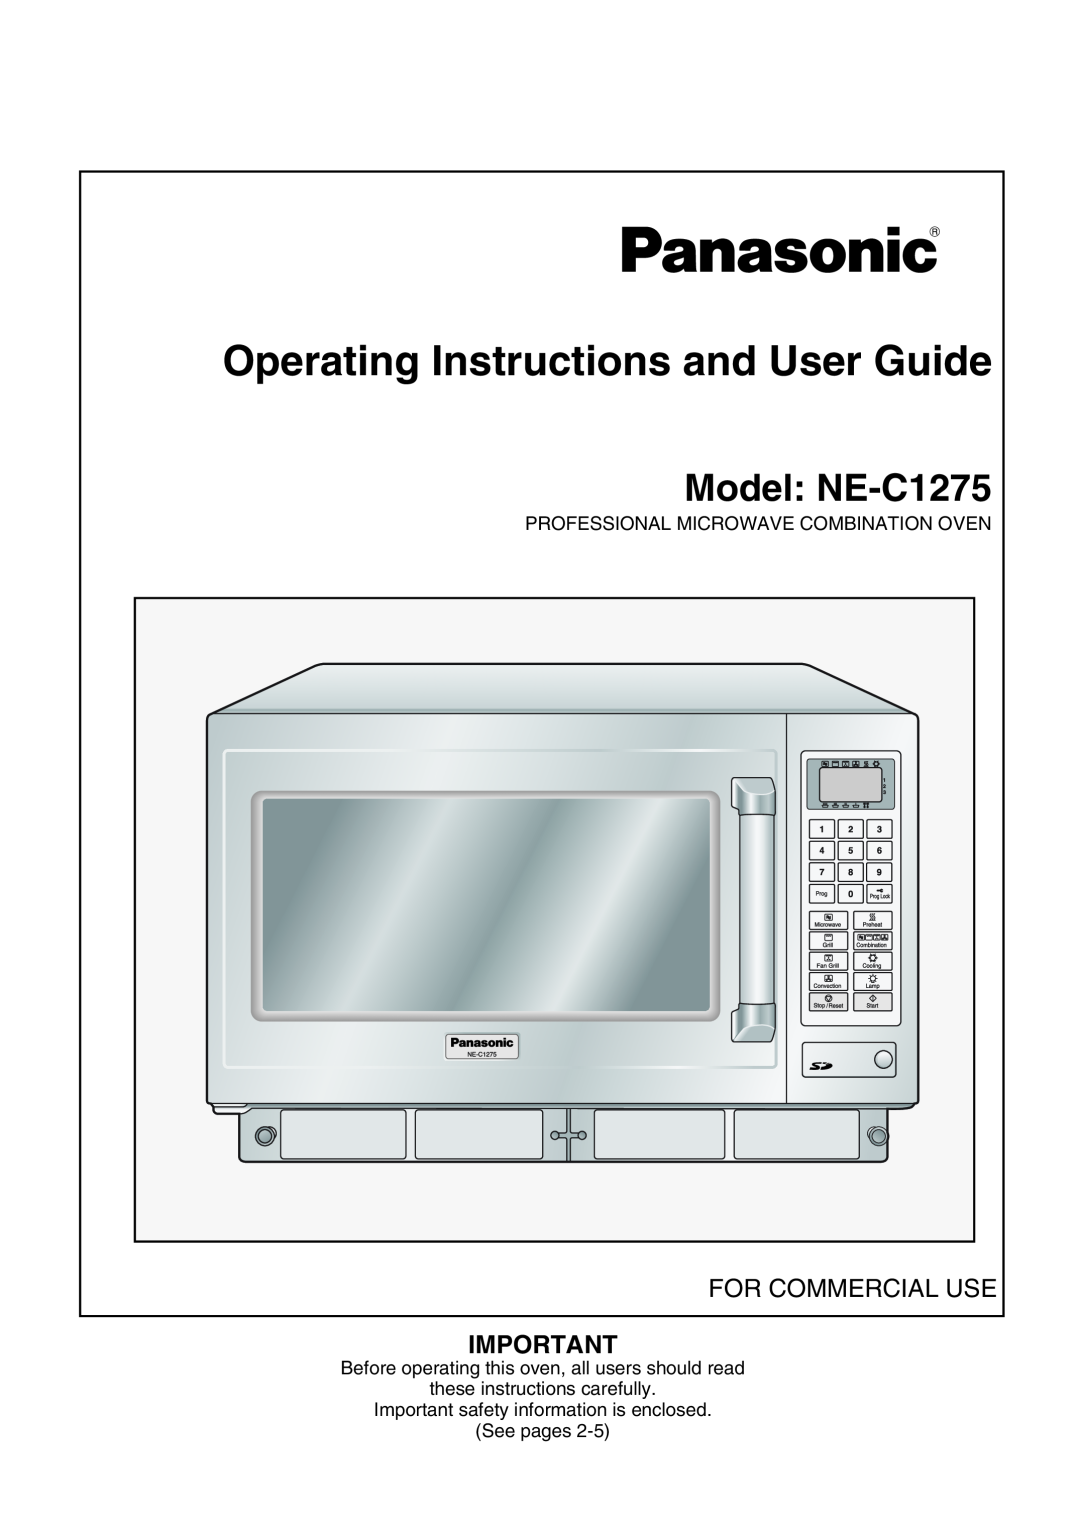 Panasonic operating instructions For Commercial Use, Operating Instructions and User Guide, Model NE-C1275 